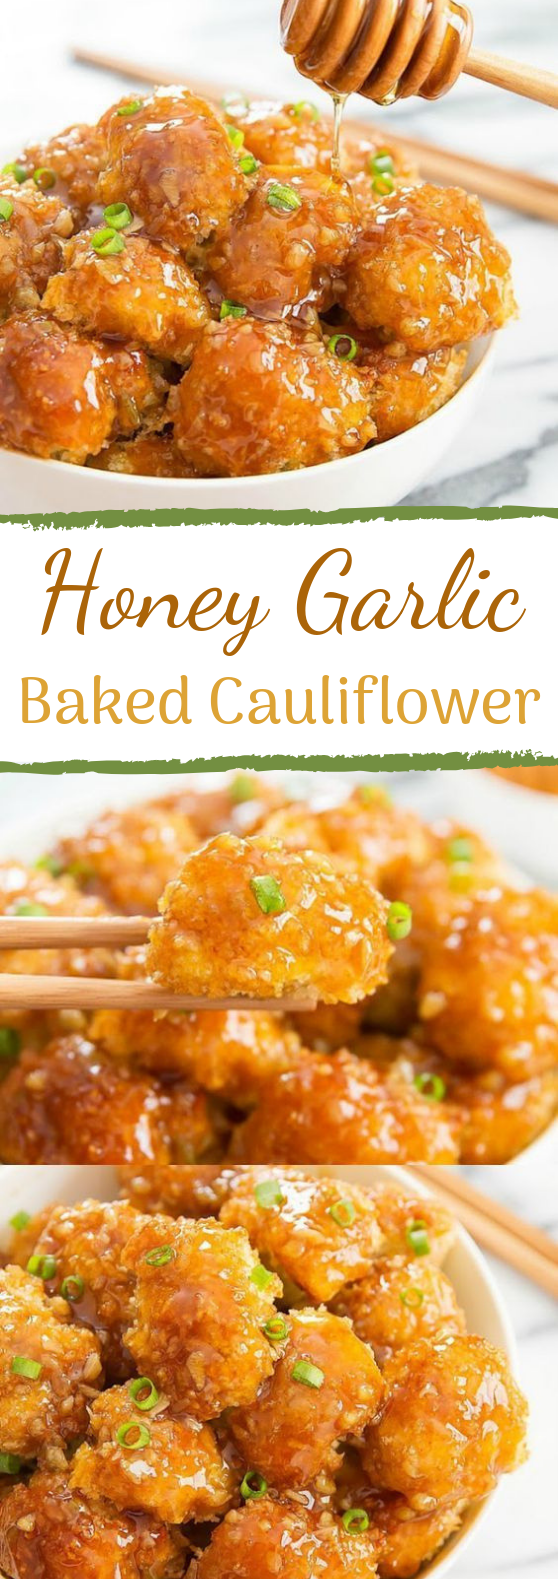 Honey Garlic Baked Cauliflower #sidedish #vegan